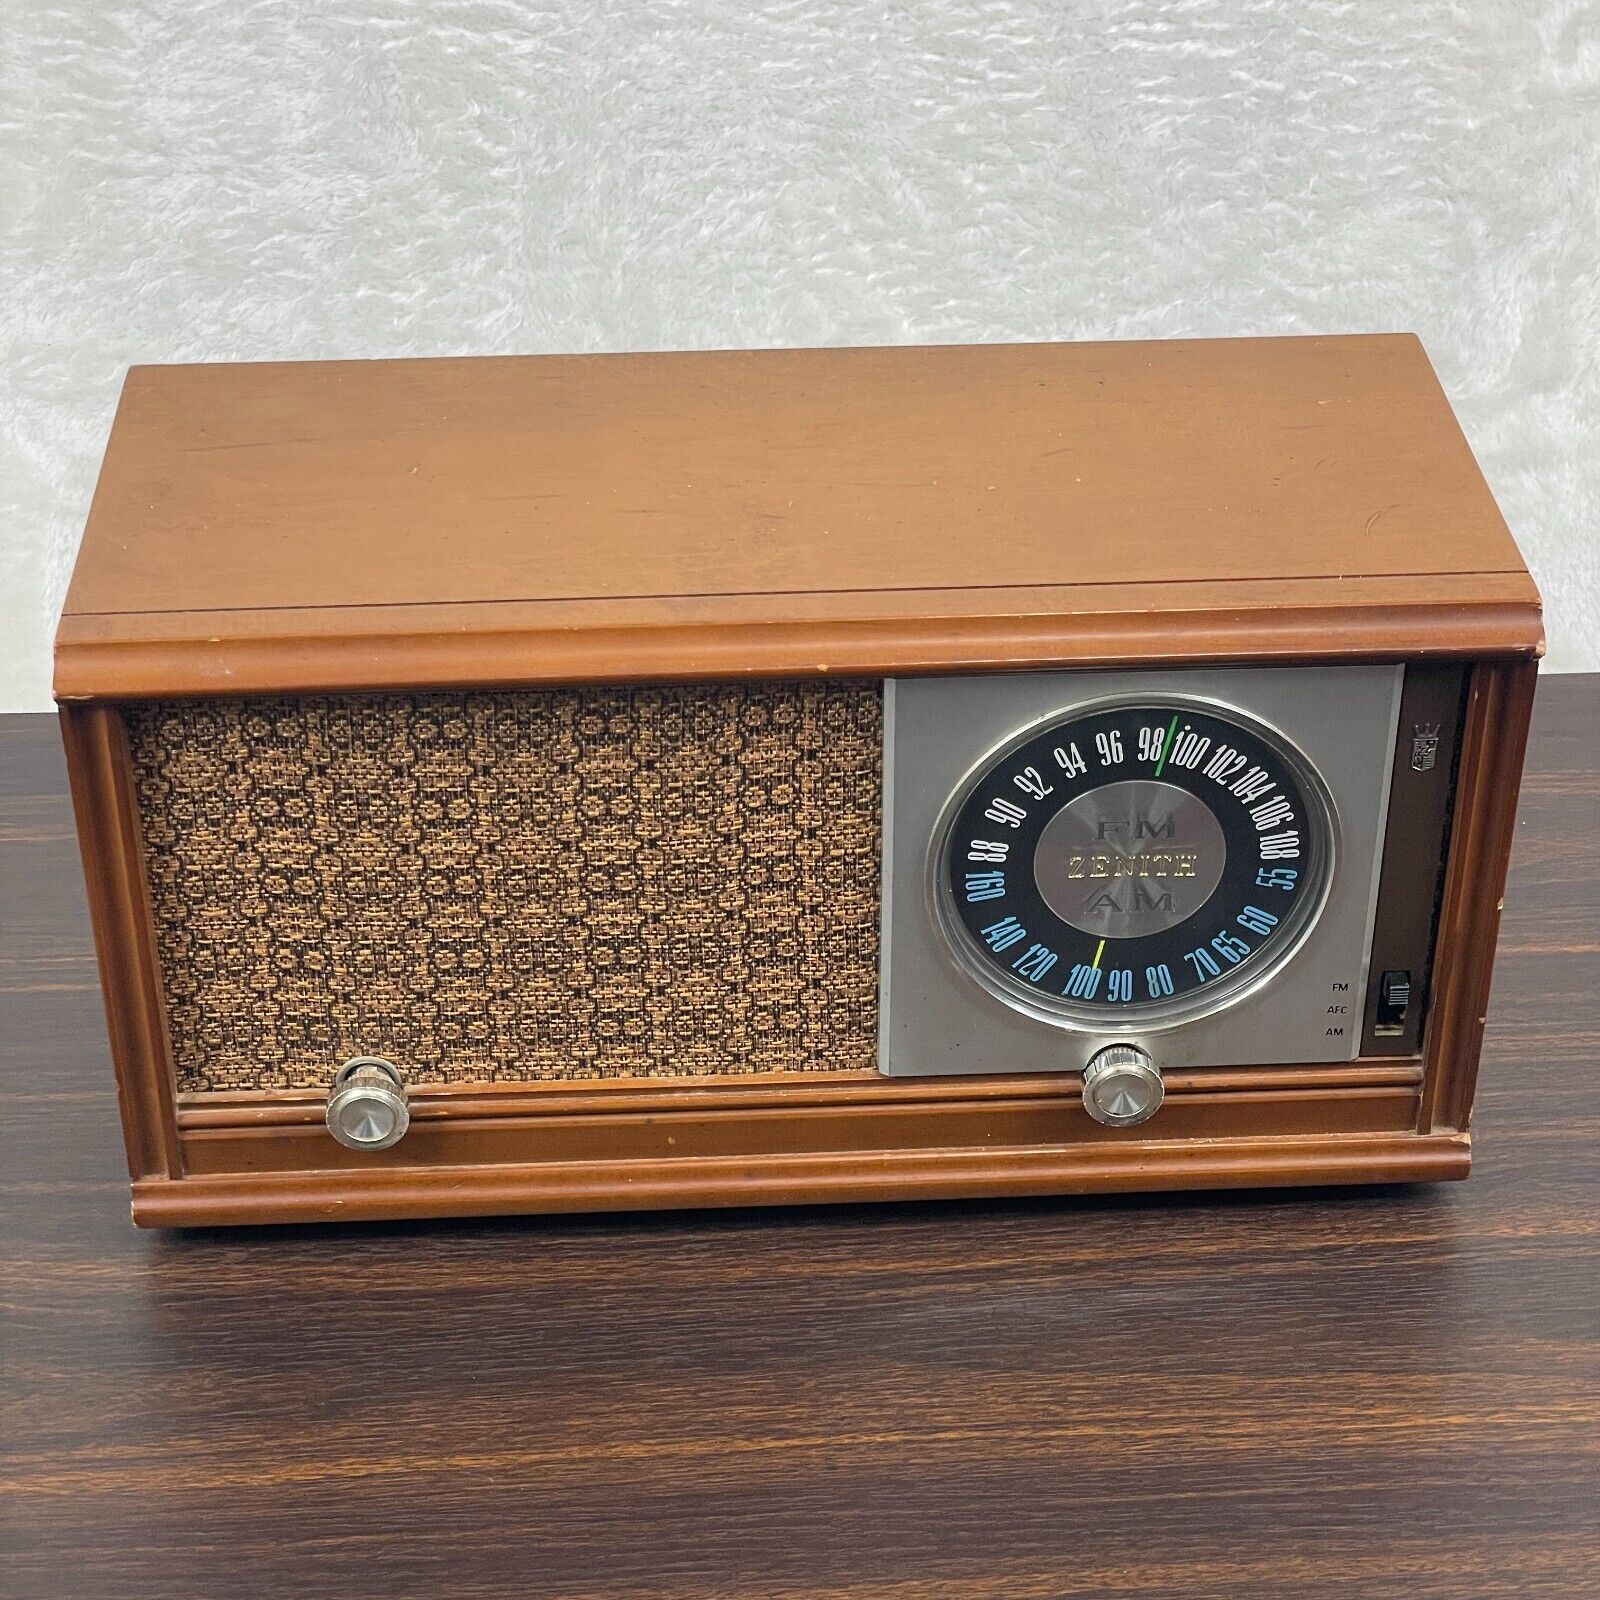 Zenith AM/FM Radio Model X323 AM FM 1950s Tube Radio - Working / Clear Sound